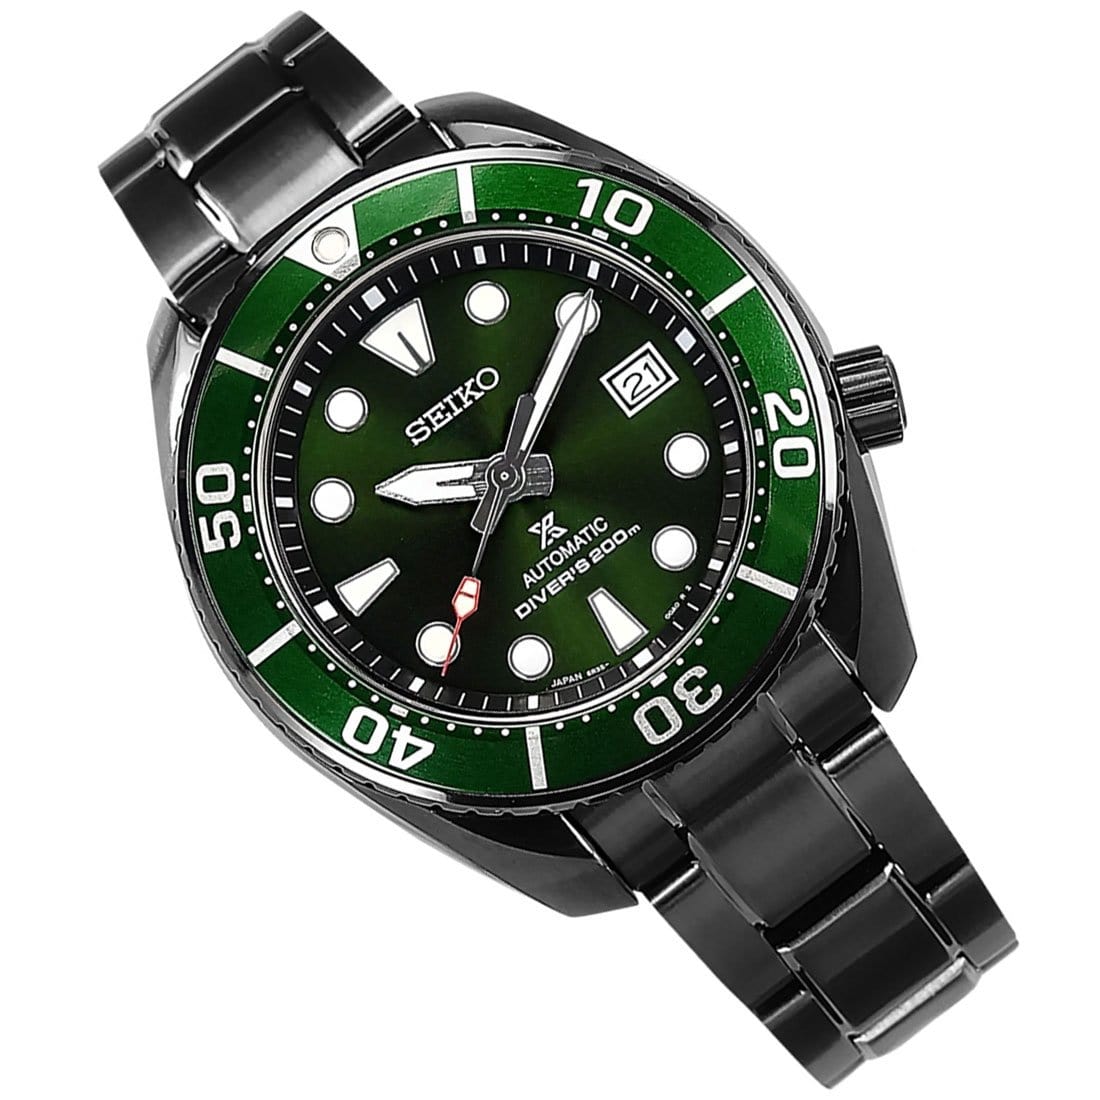 SPB195J1 SPB195J SPB195 Seiko Prospex SUMO Automatic Limited Edition Men's Watch